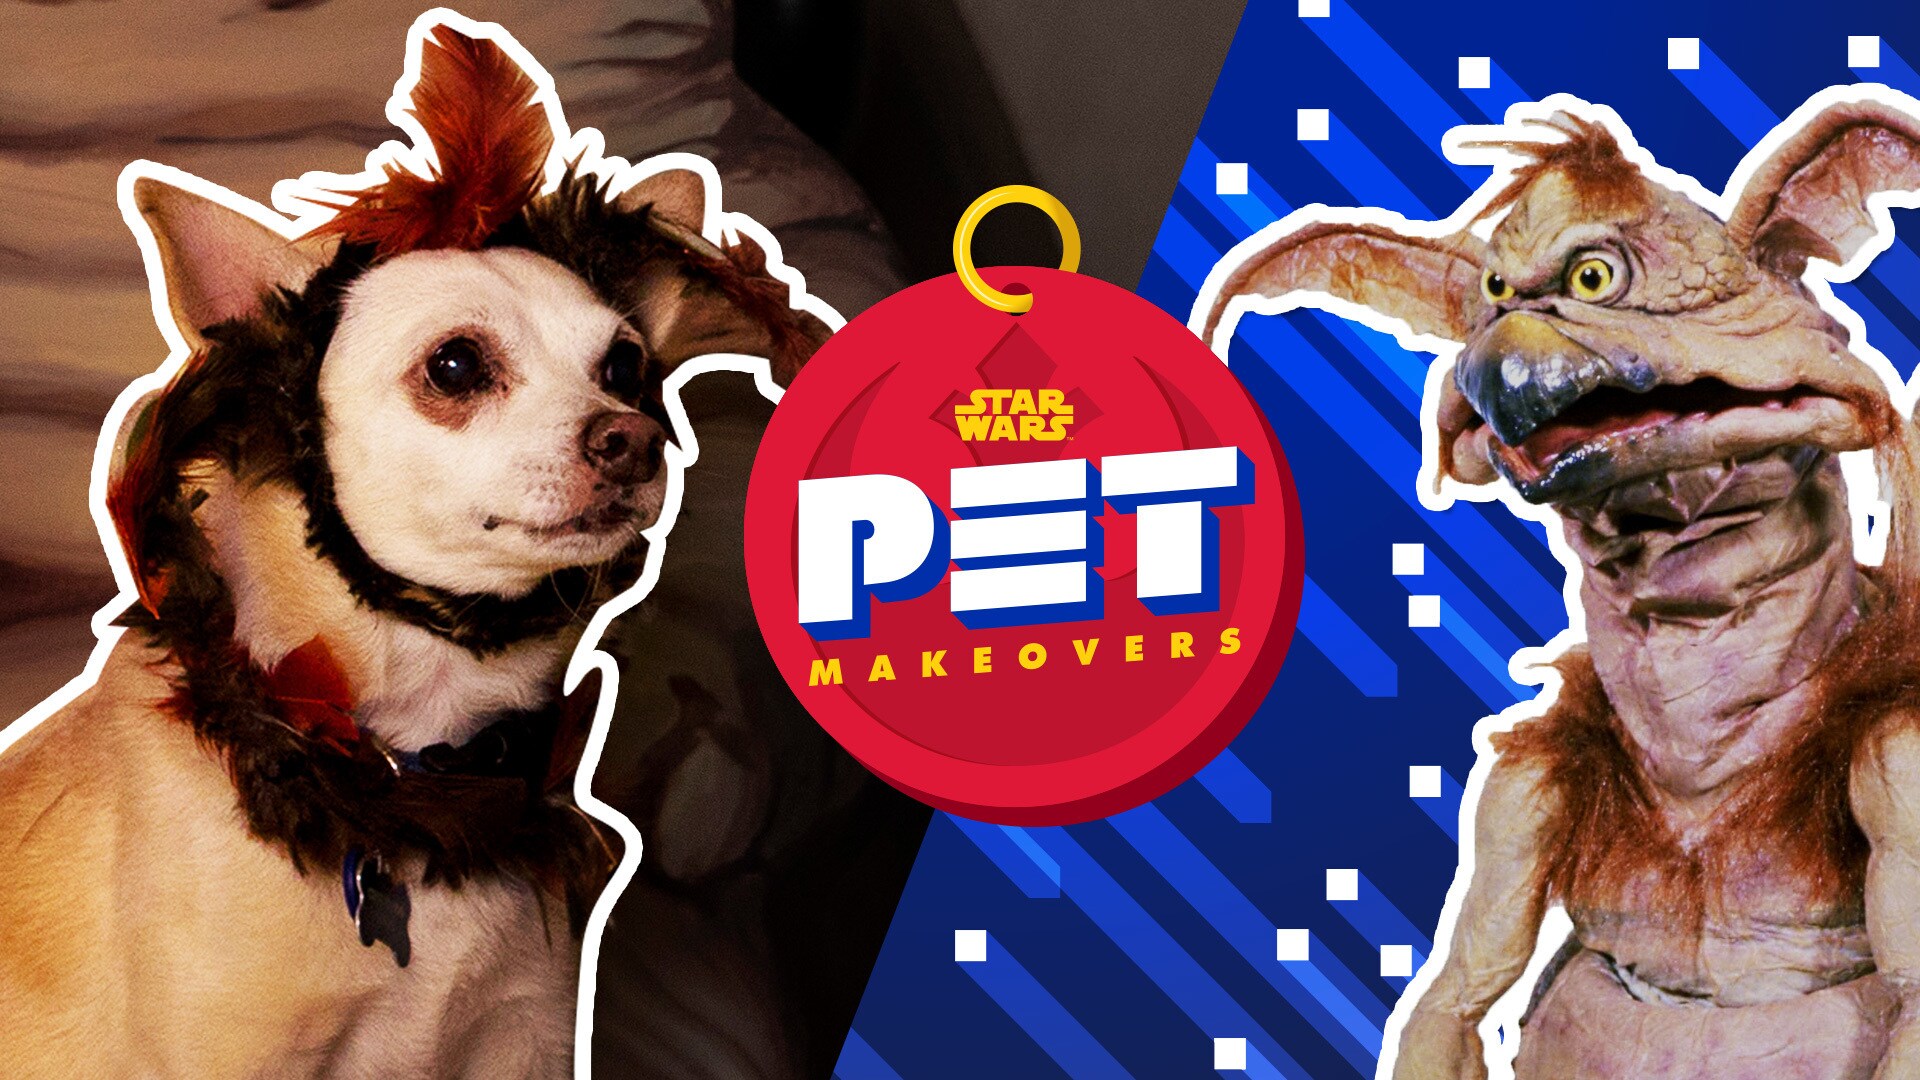 Salacious B. Crumb and Princess Leia | Star Wars Pet Makeovers by Oh My Disney